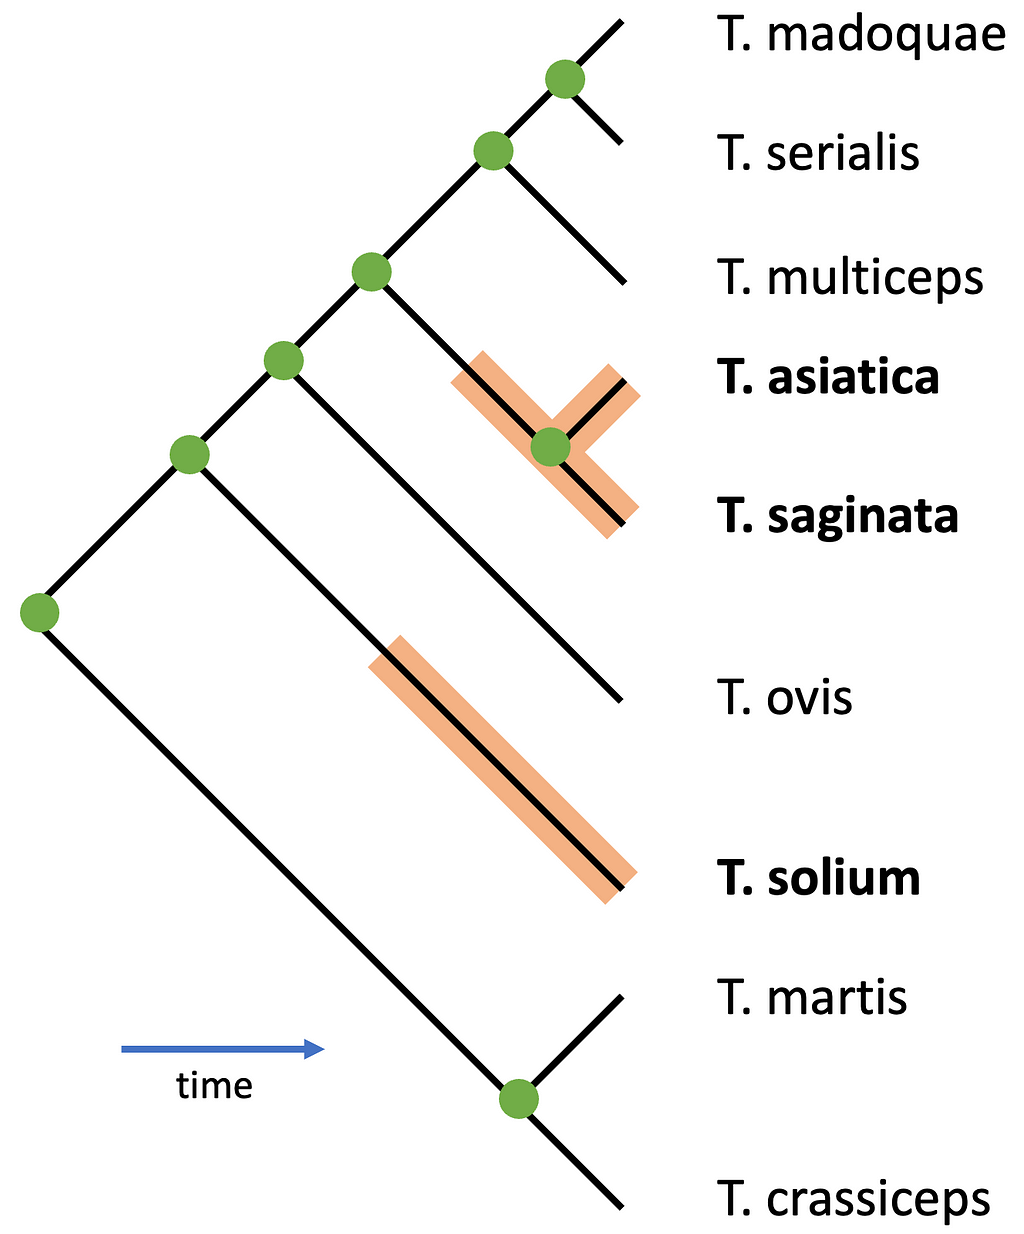 Phylogenetic tree of Taenia tapeworm species.